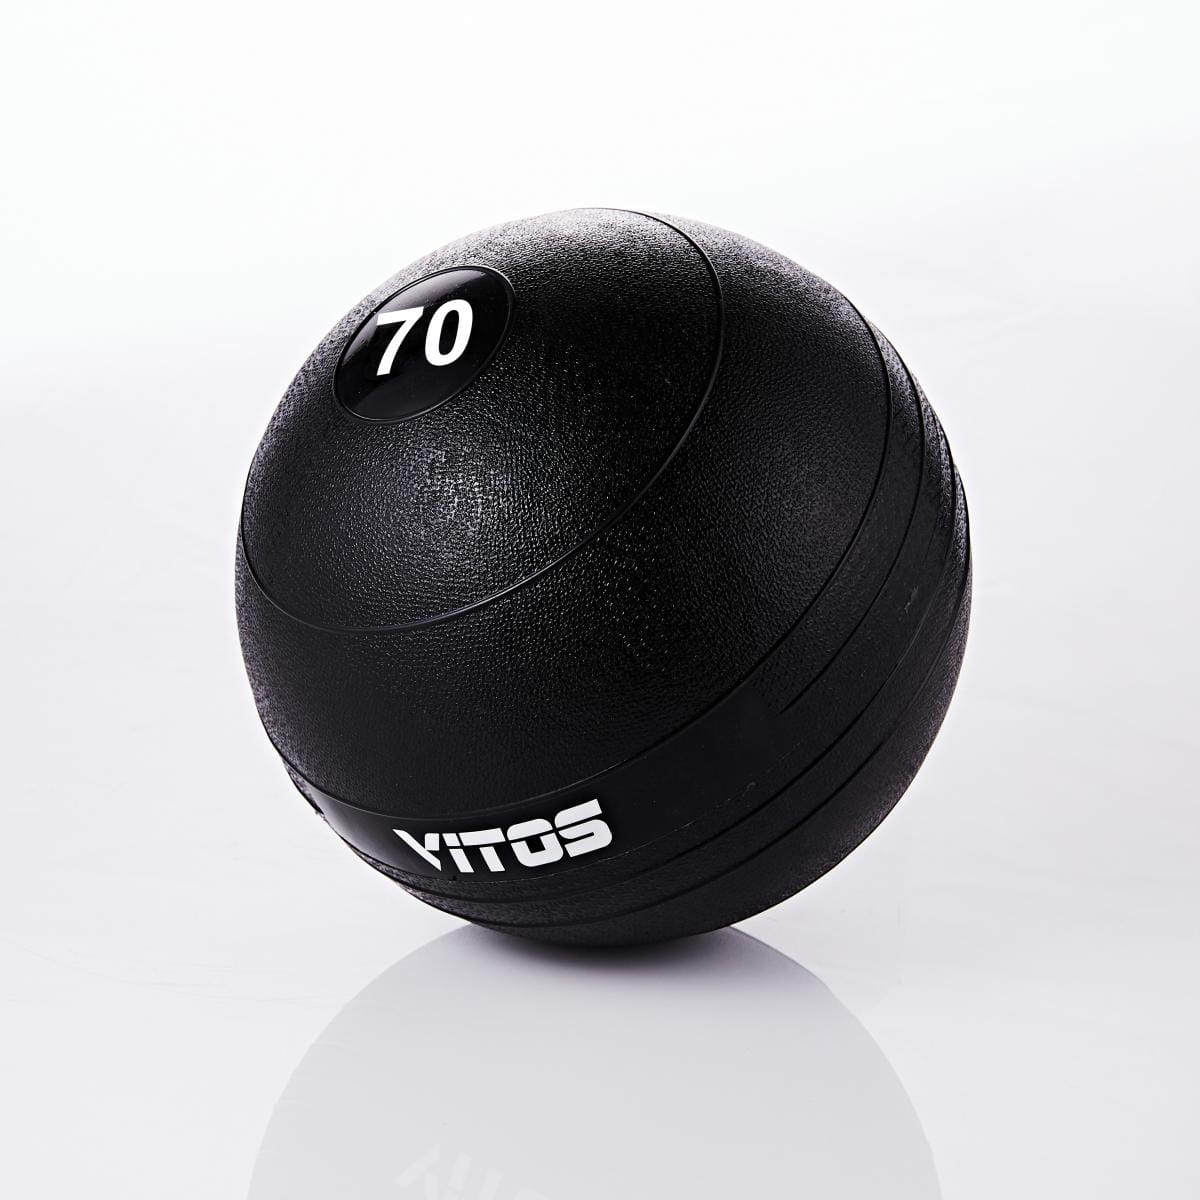 VITOS 重力球 70磅 32公斤 0